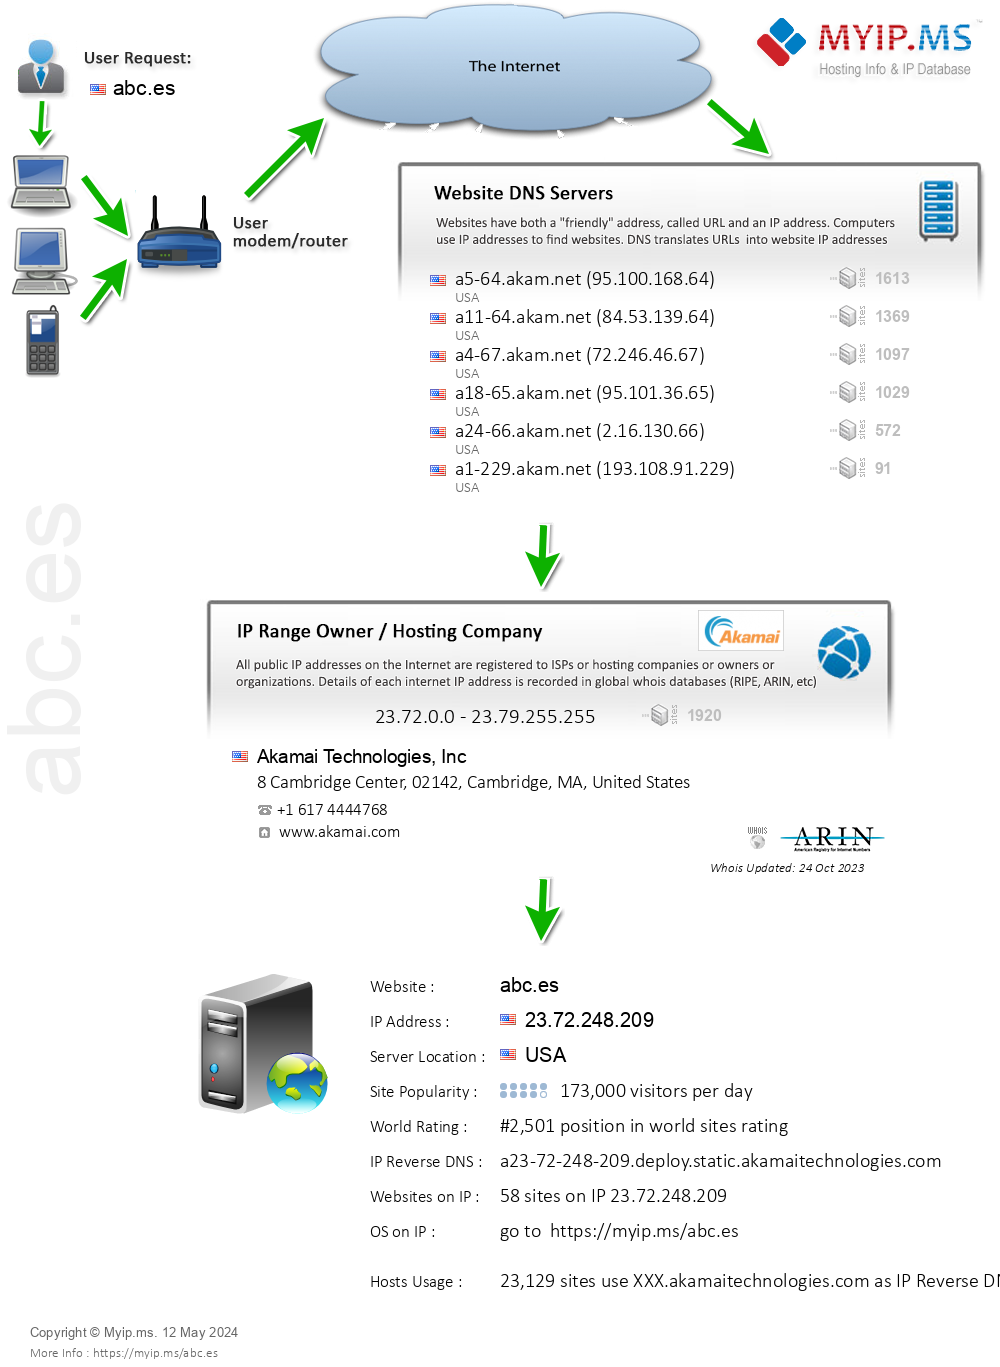 Abc.es - Website Hosting Visual IP Diagram